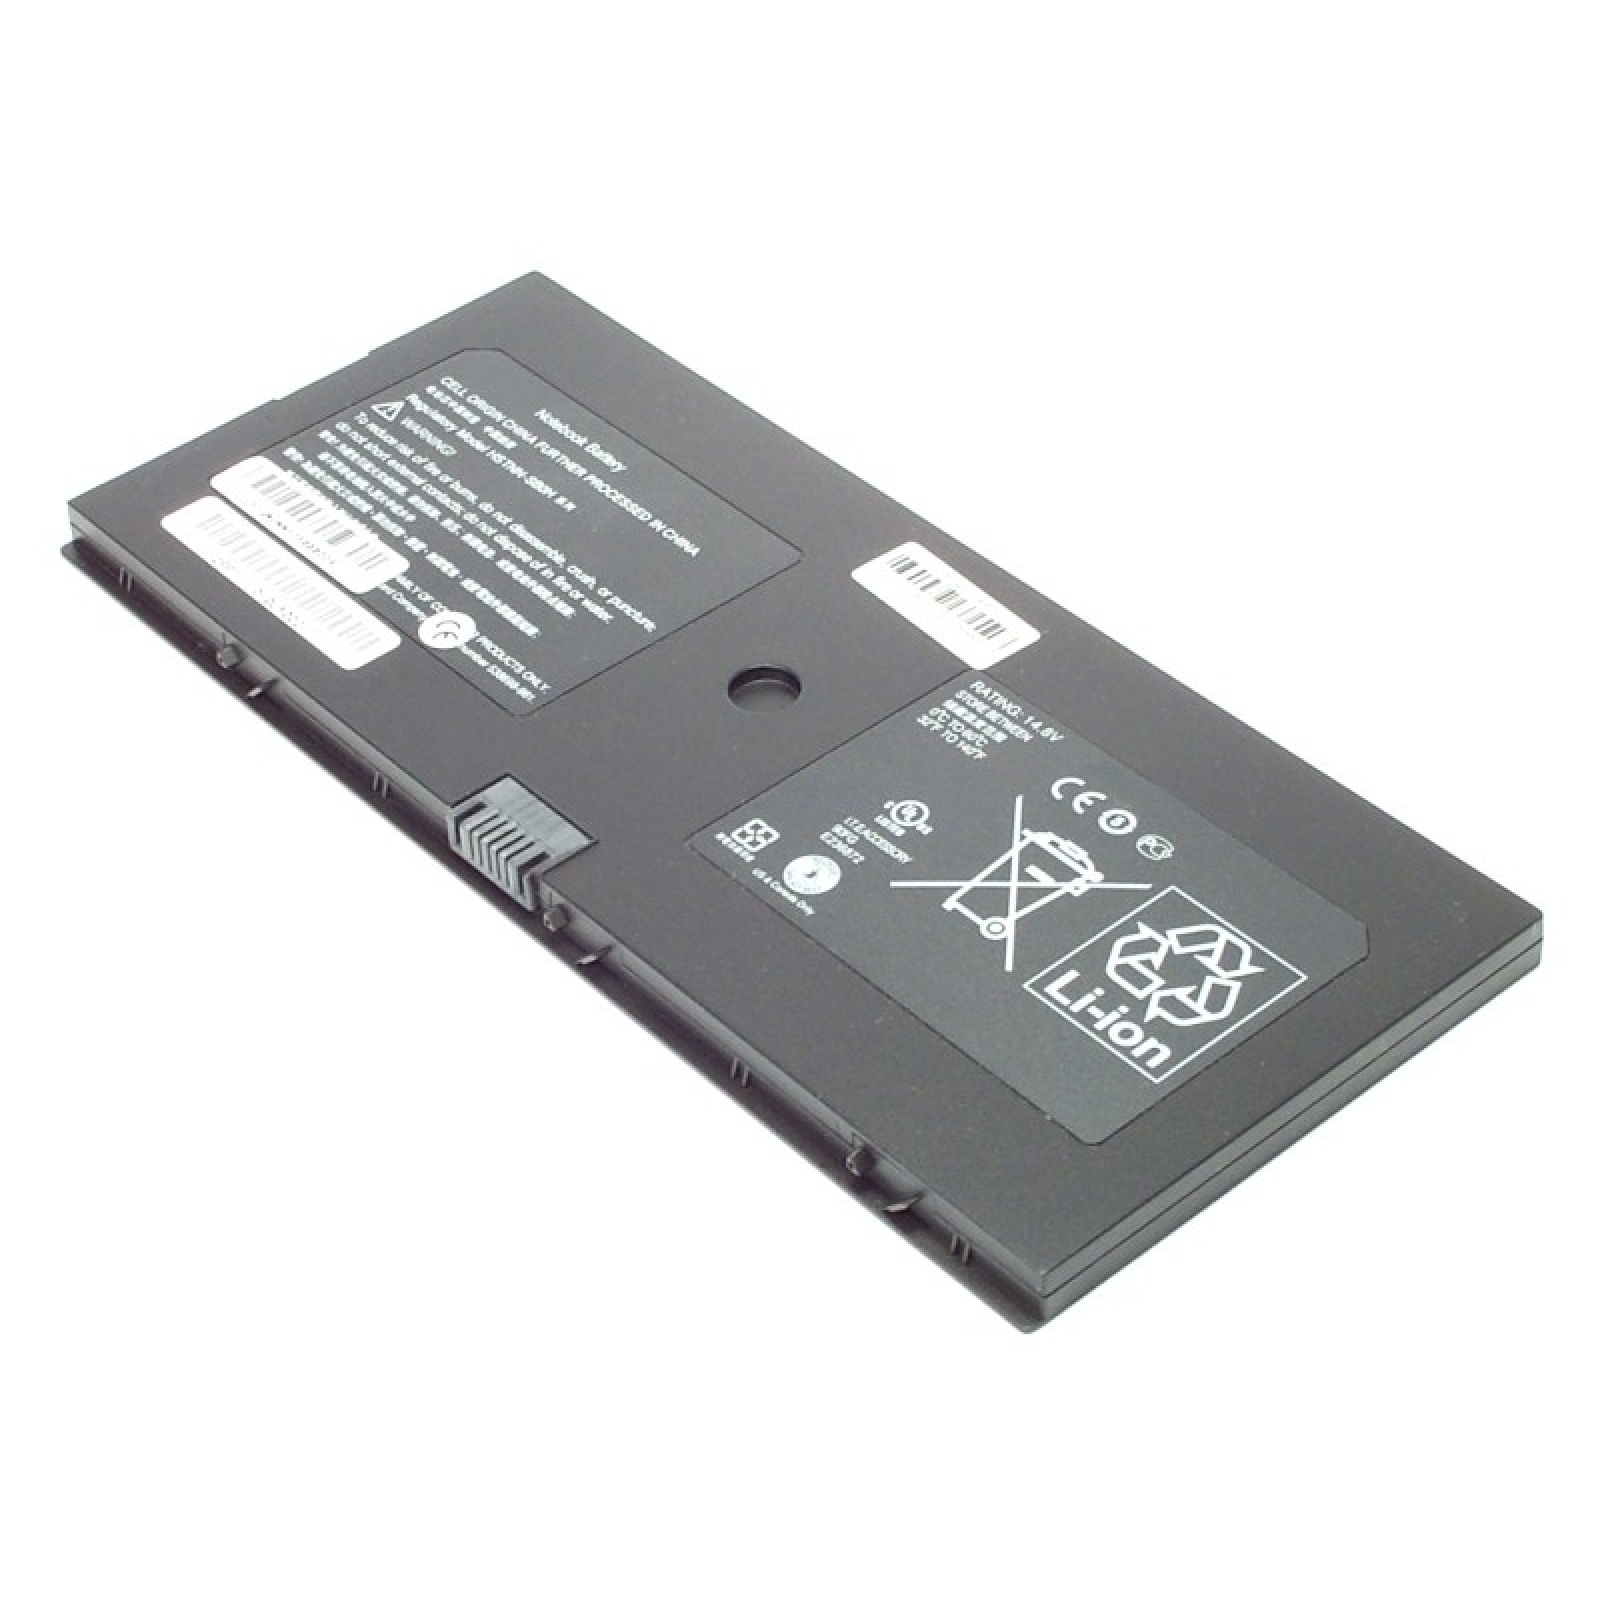 14.8V, für 2800 LiPolymer, mAh Volt, Notebook-Akku, 2800mAh HP ProBook (LiPoly) MTXTEC 14.8 Akku 5310m Lithium-Polymer